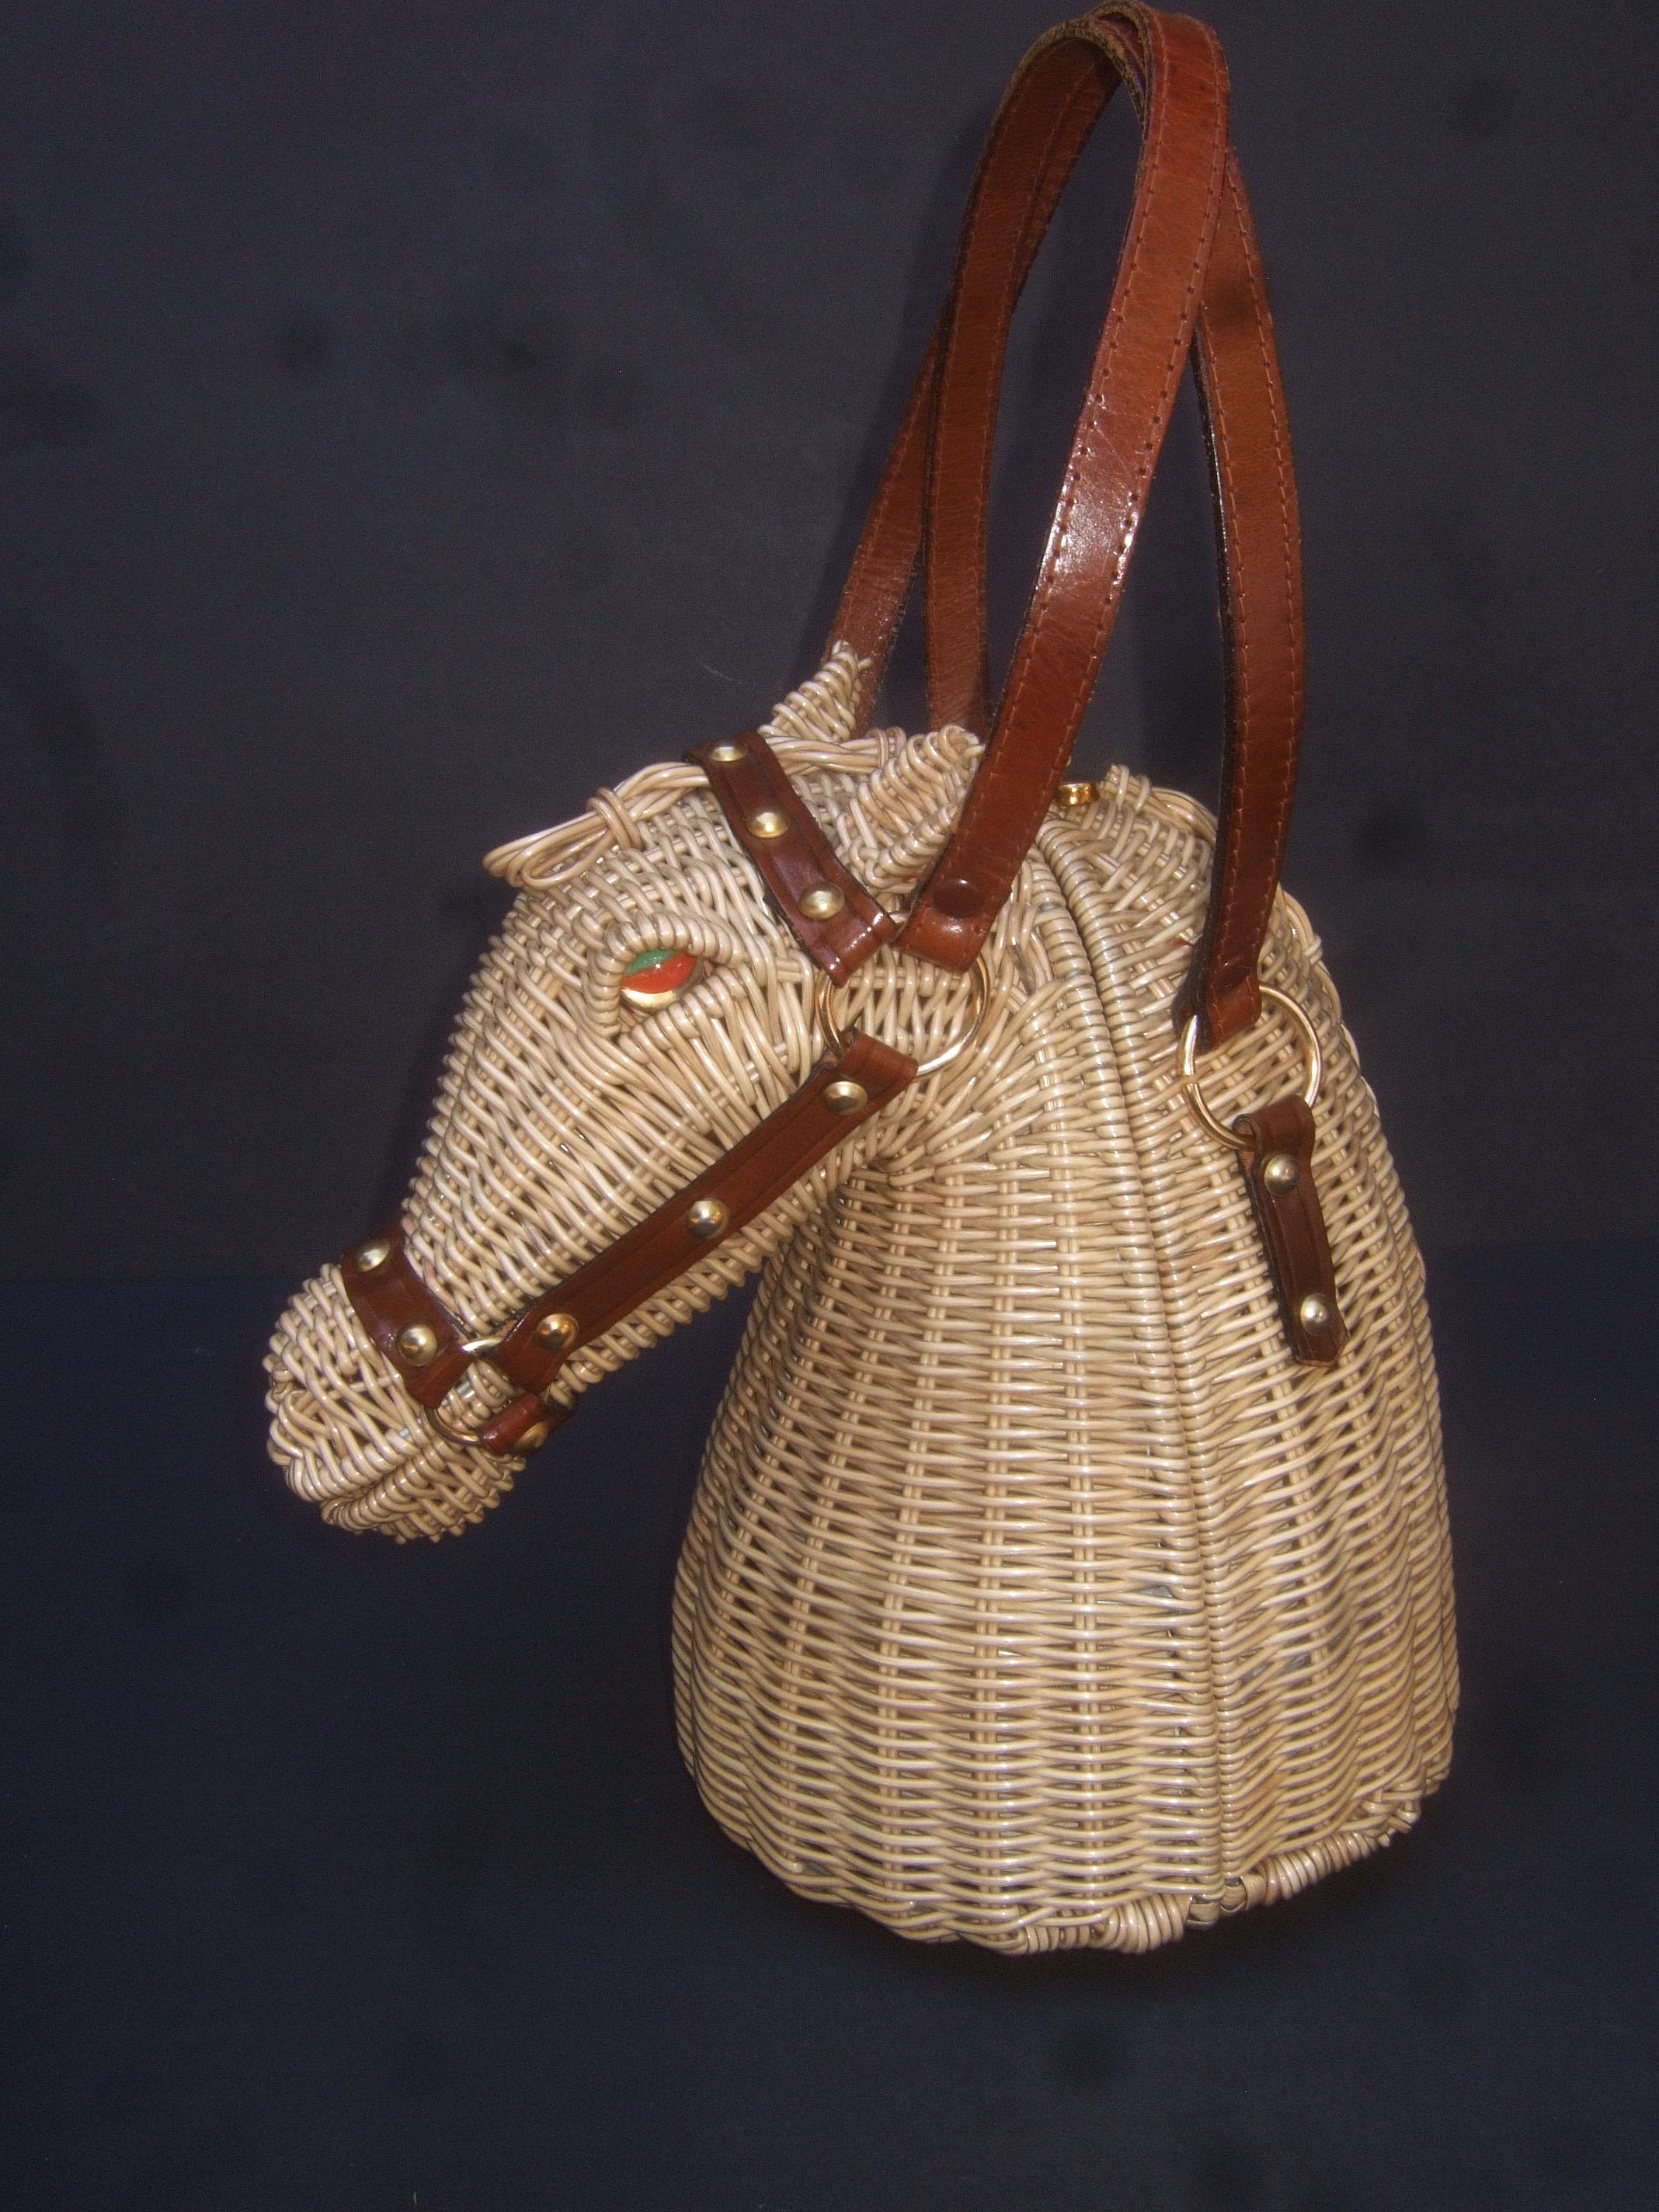 Extremely Rare Figural Wicker Artisan Horse Design Handbag c 1970 6